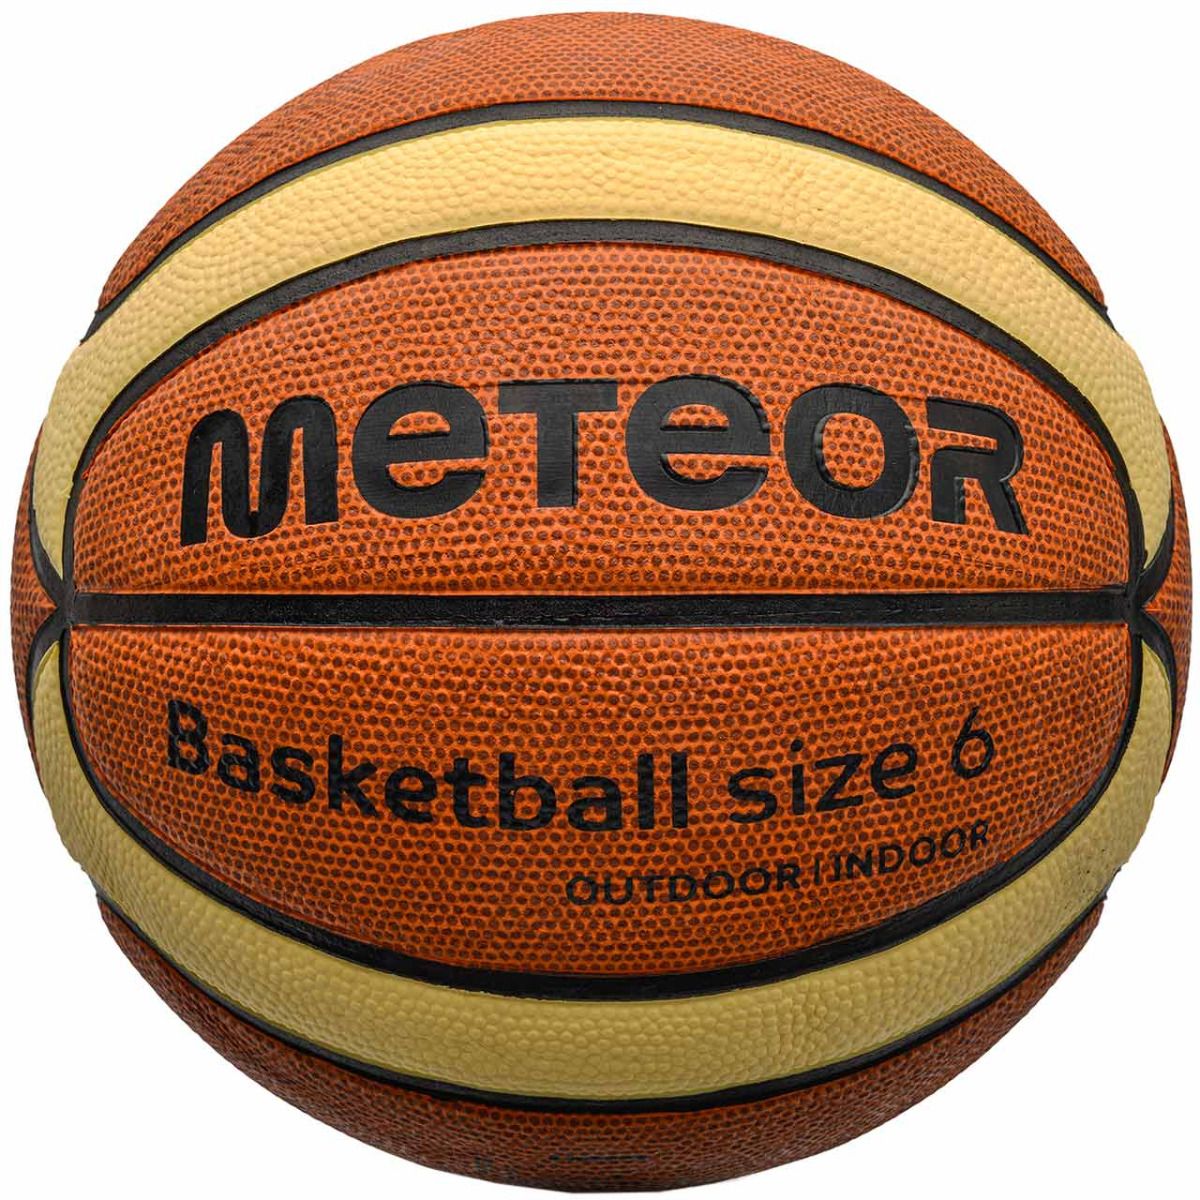 Meteor Basketball Cellular 6 10101